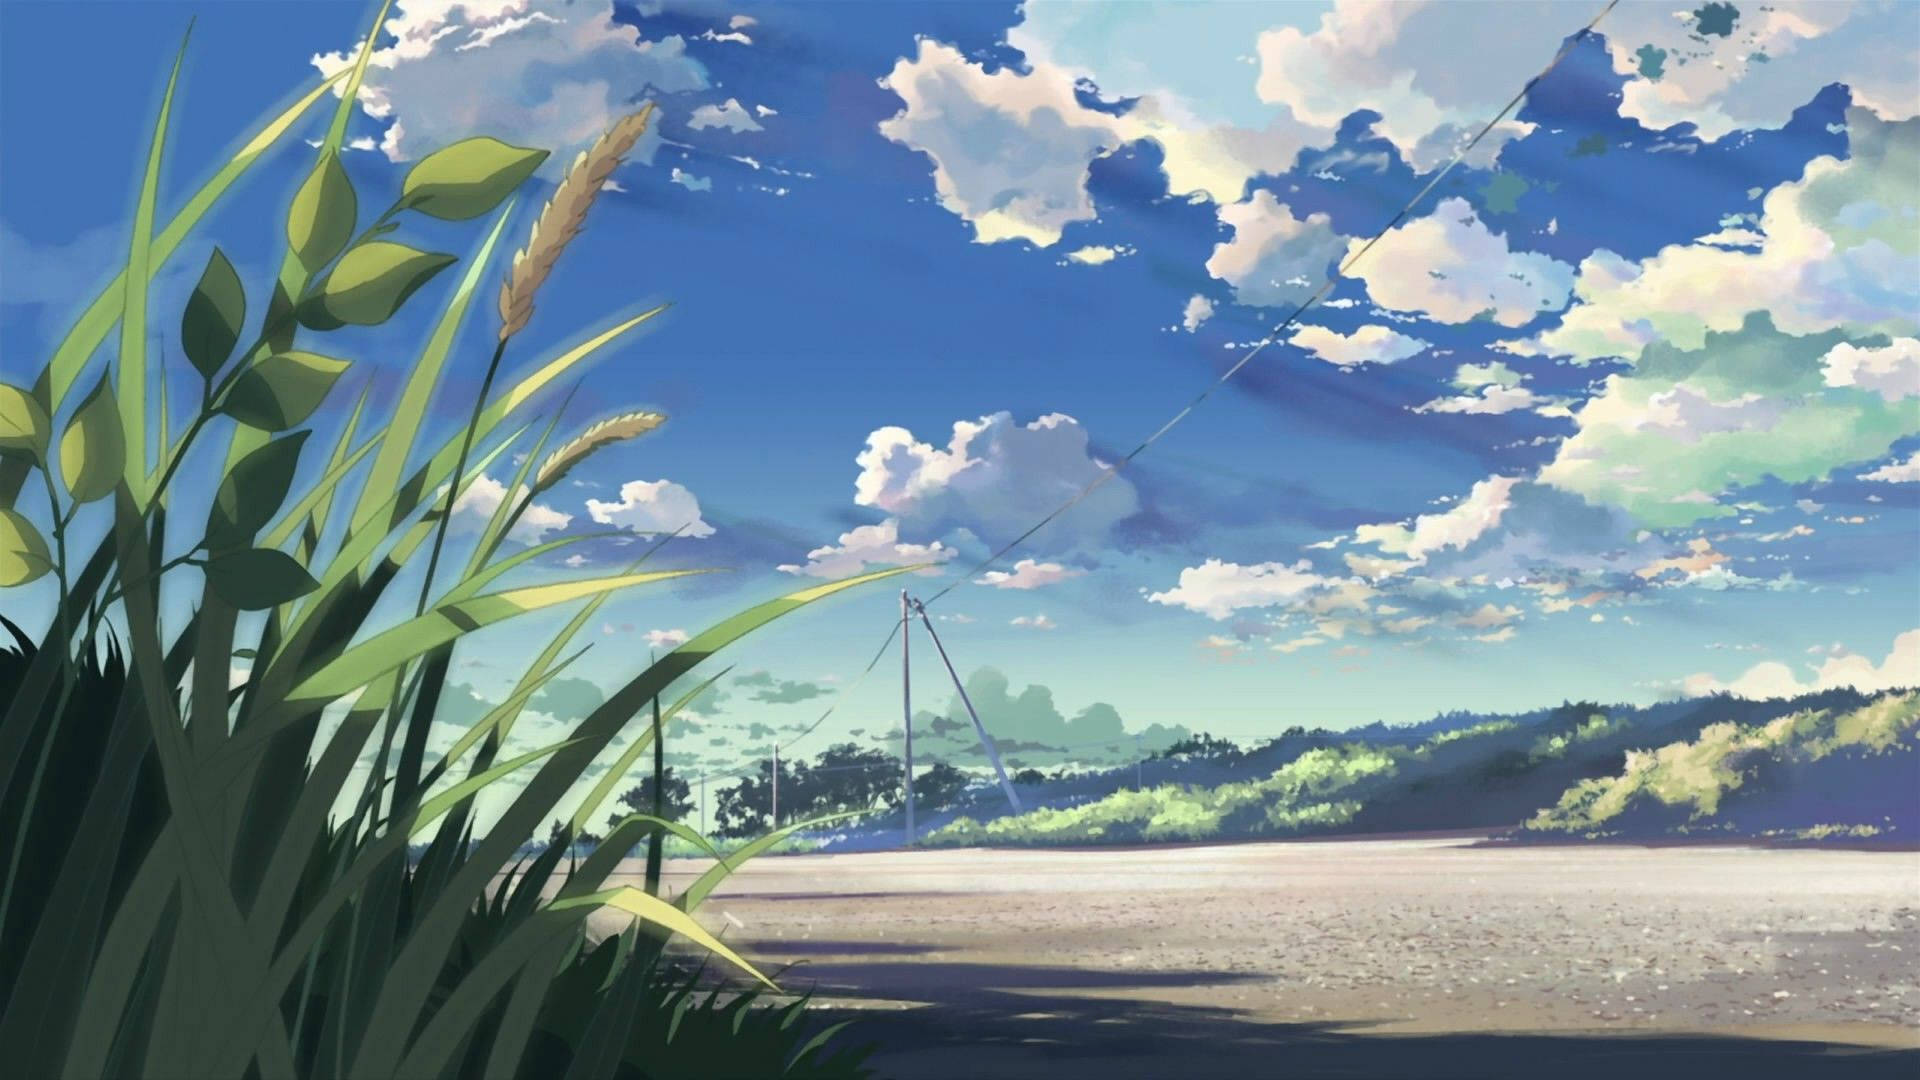 Anime Aesthetic Scenery Background